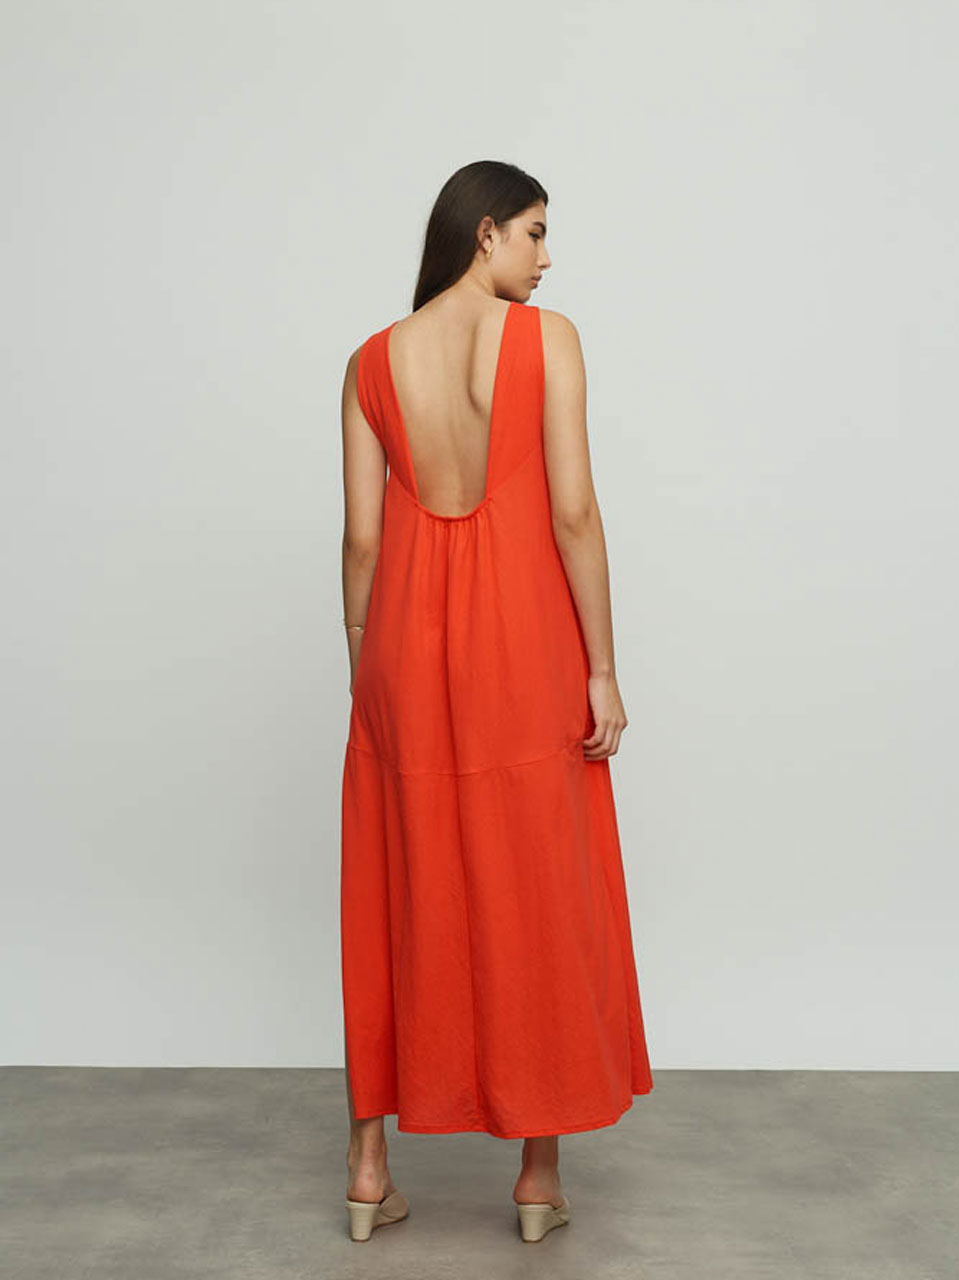 Ofilia's Oniyuri Open Back Dress Orange